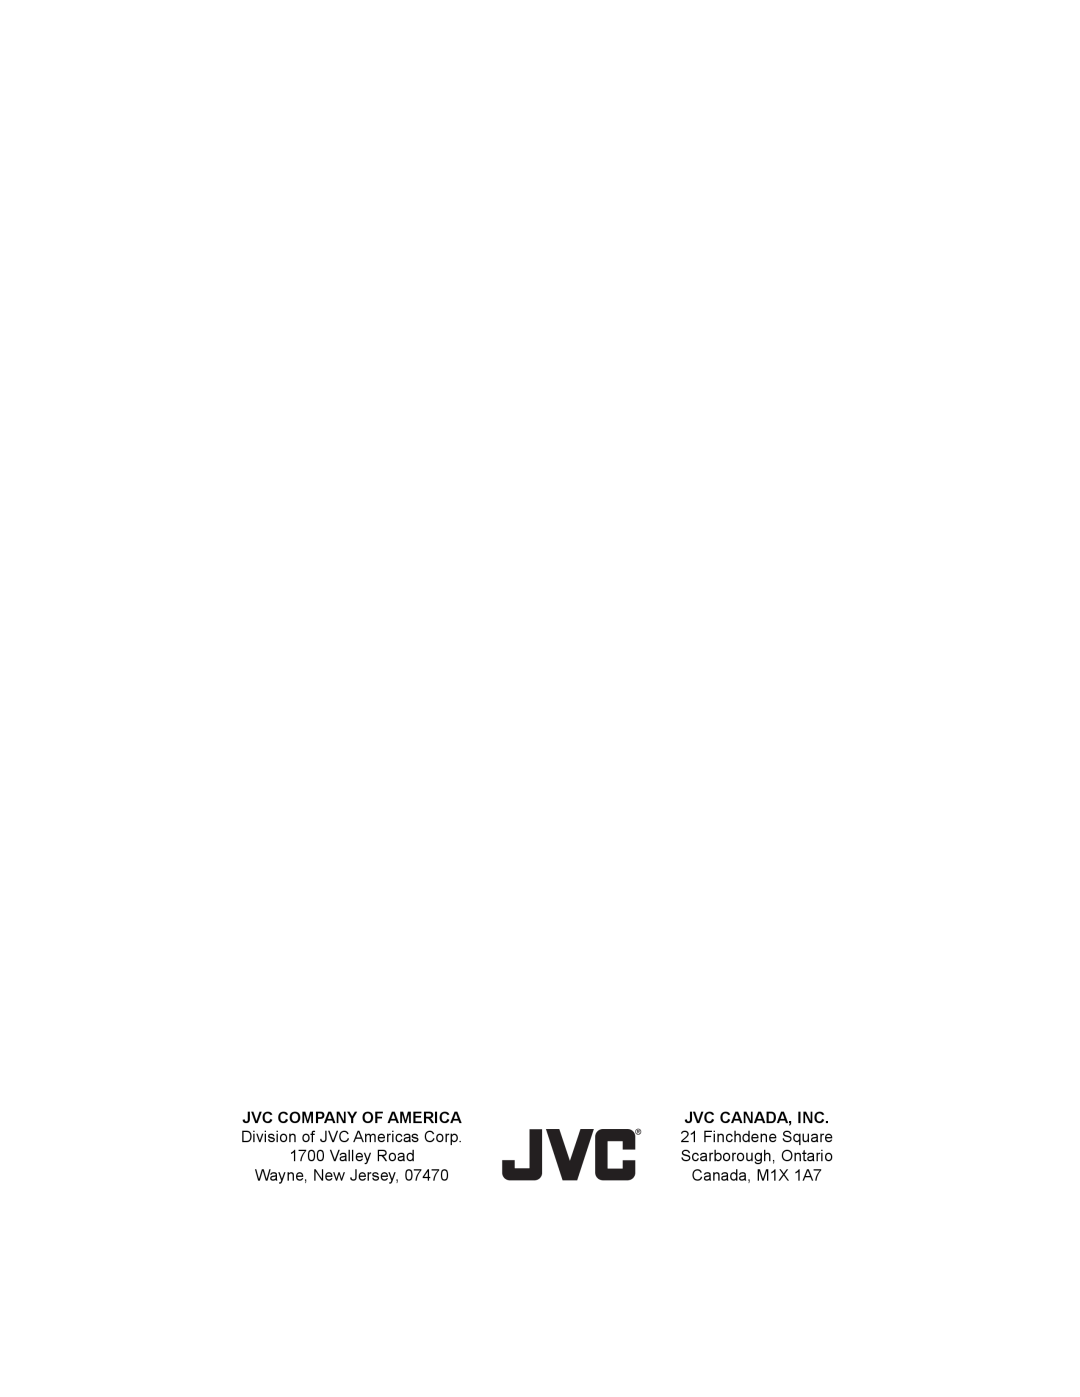 JVC PD-42X776 manual Jvc Company Of America, Jvc Canada, Inc, Canada, M1X 1A7 